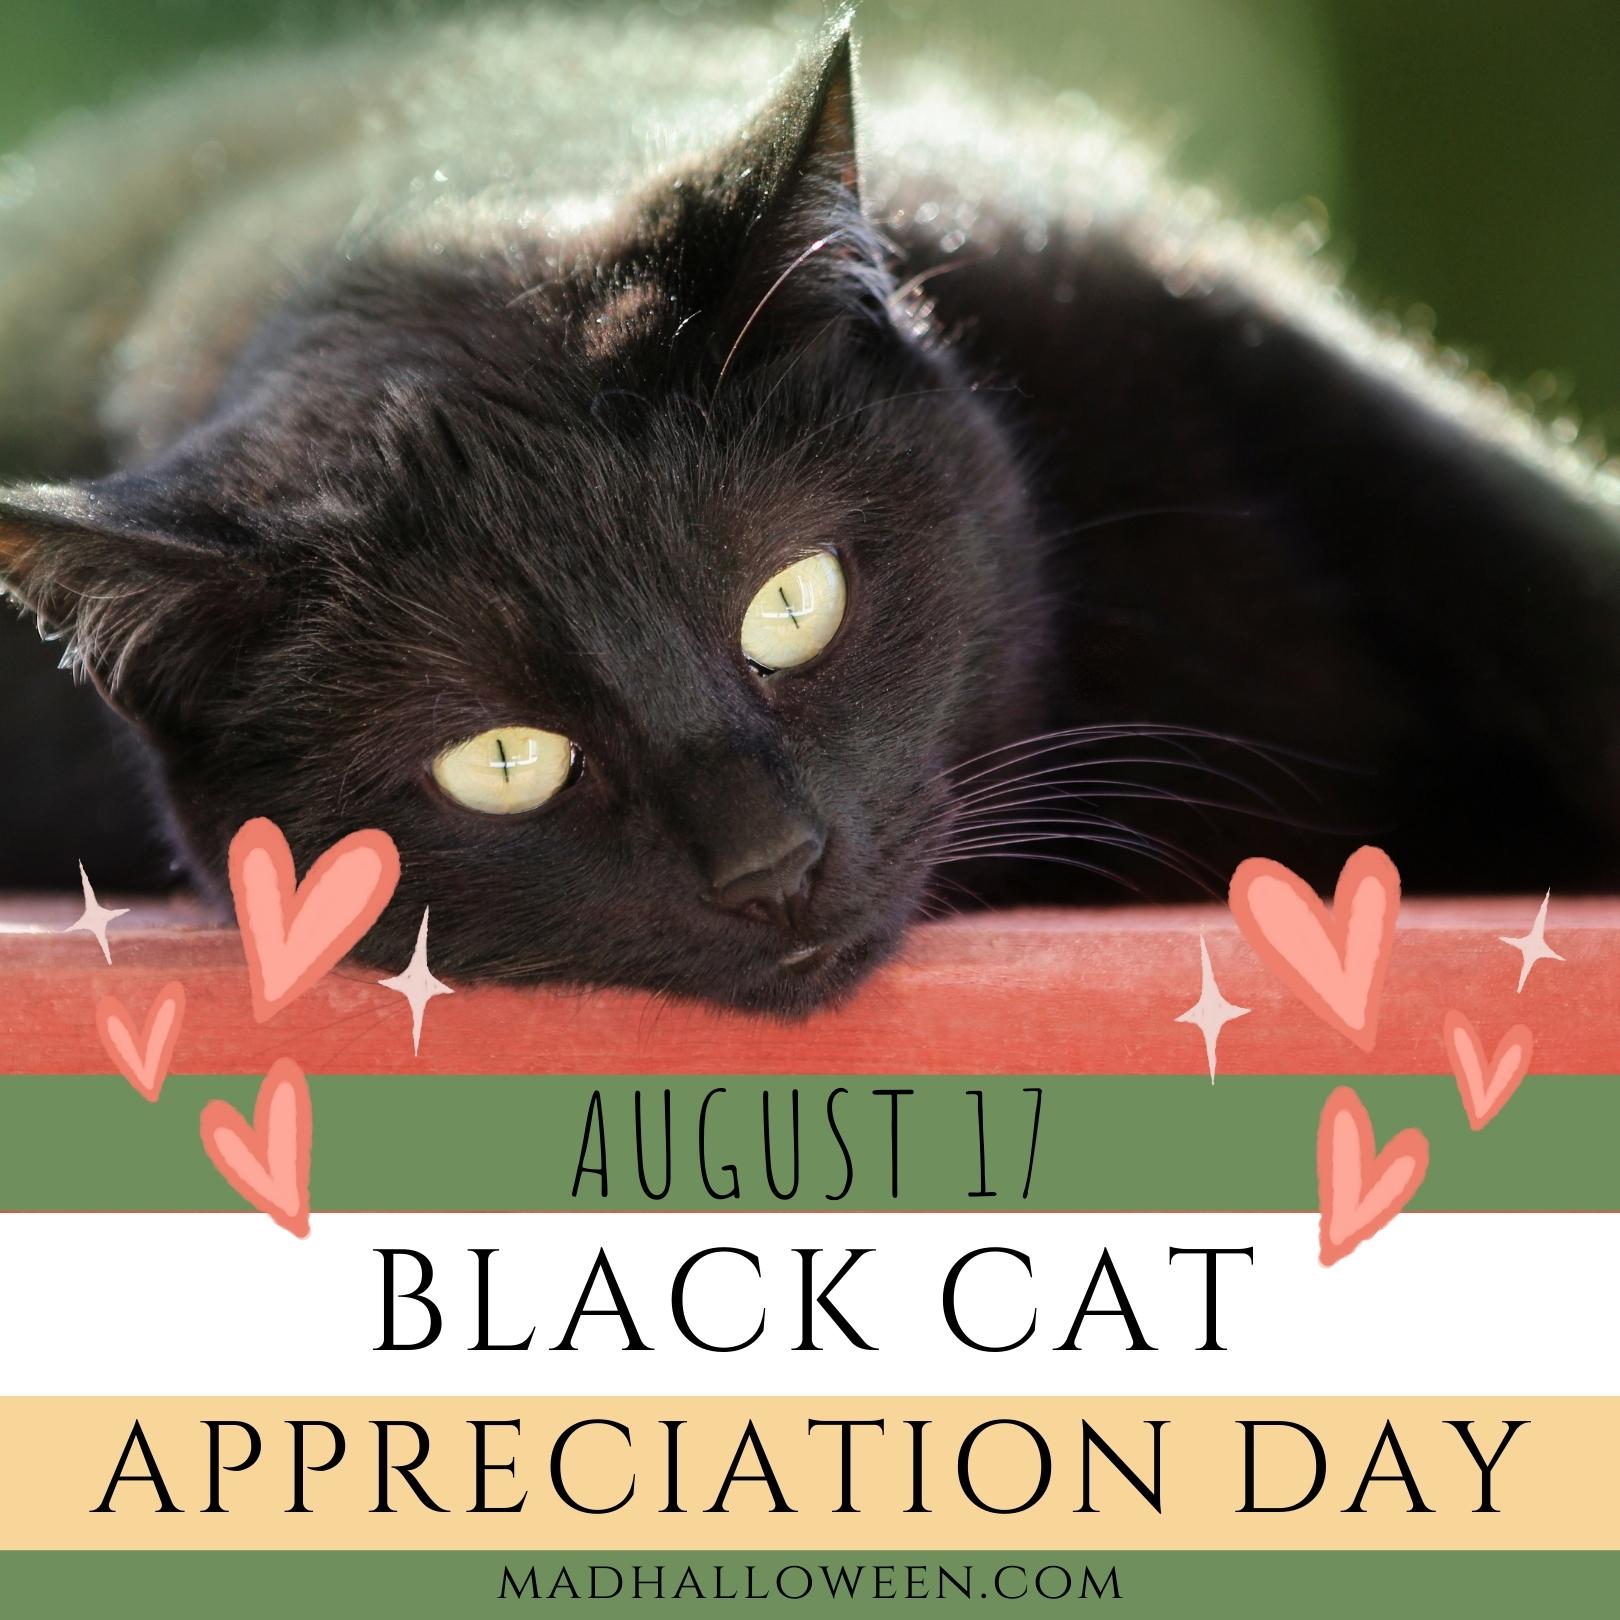 Black Cat Appreciation Day August 17 - Mad Halloween